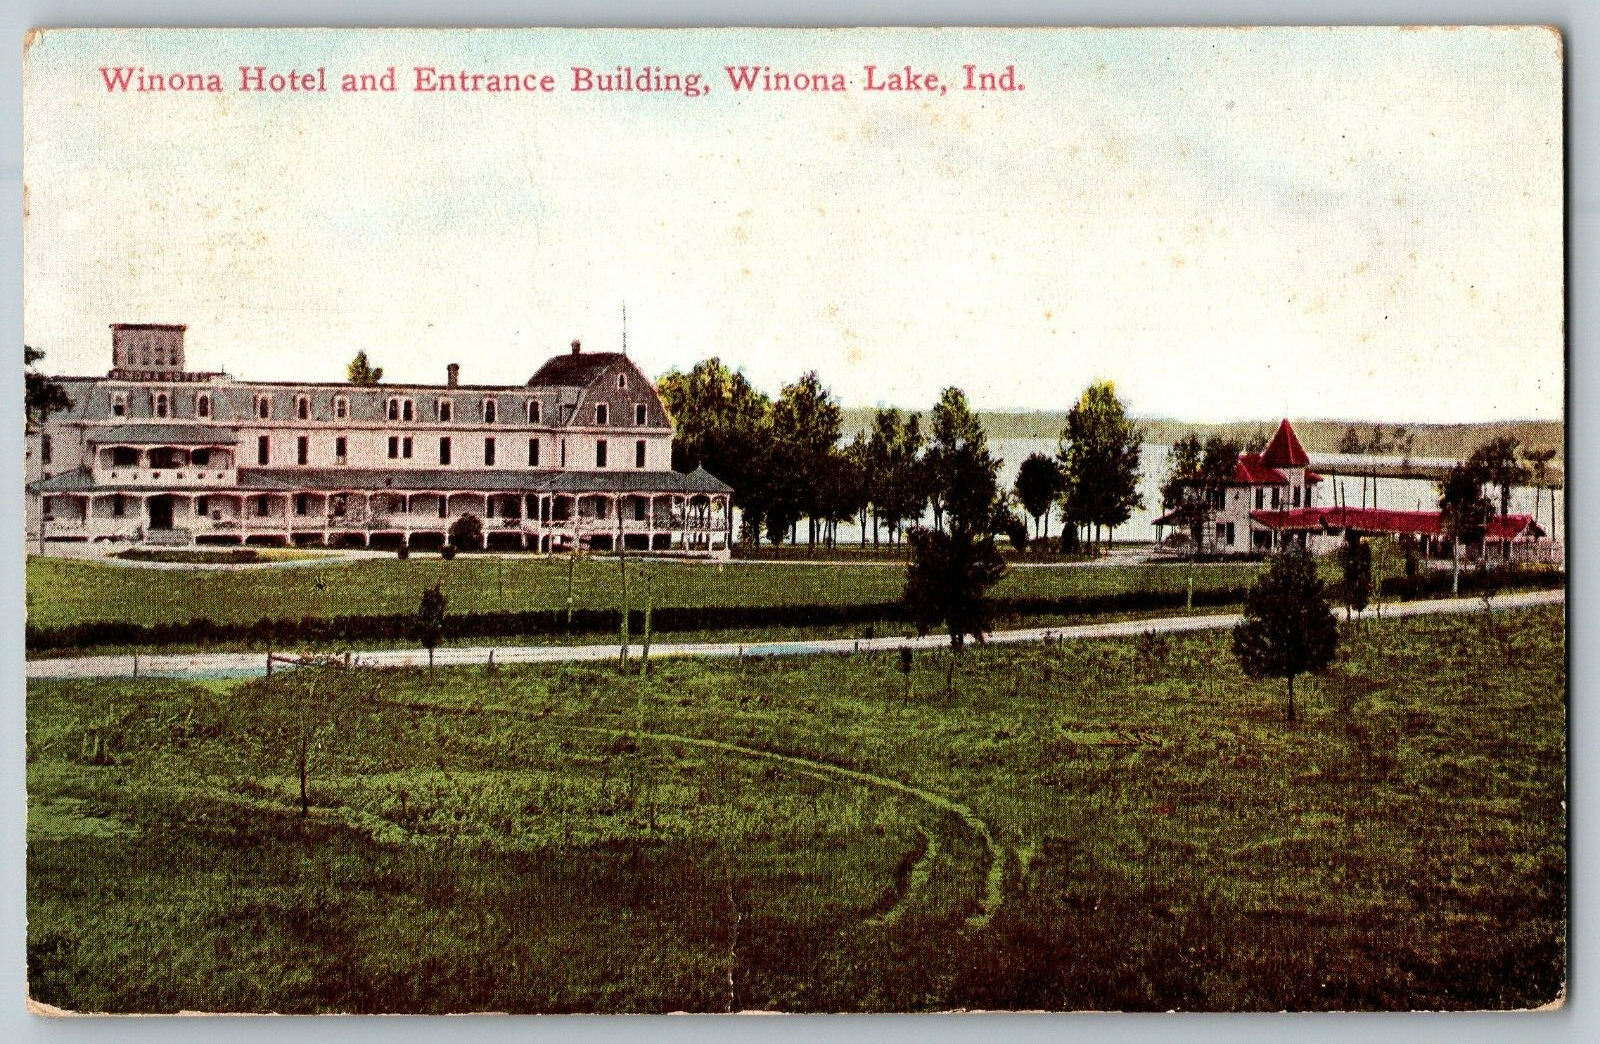 Winona Lake, Indiana - Winona Hotel & Entrance Building - Vintage Postcard